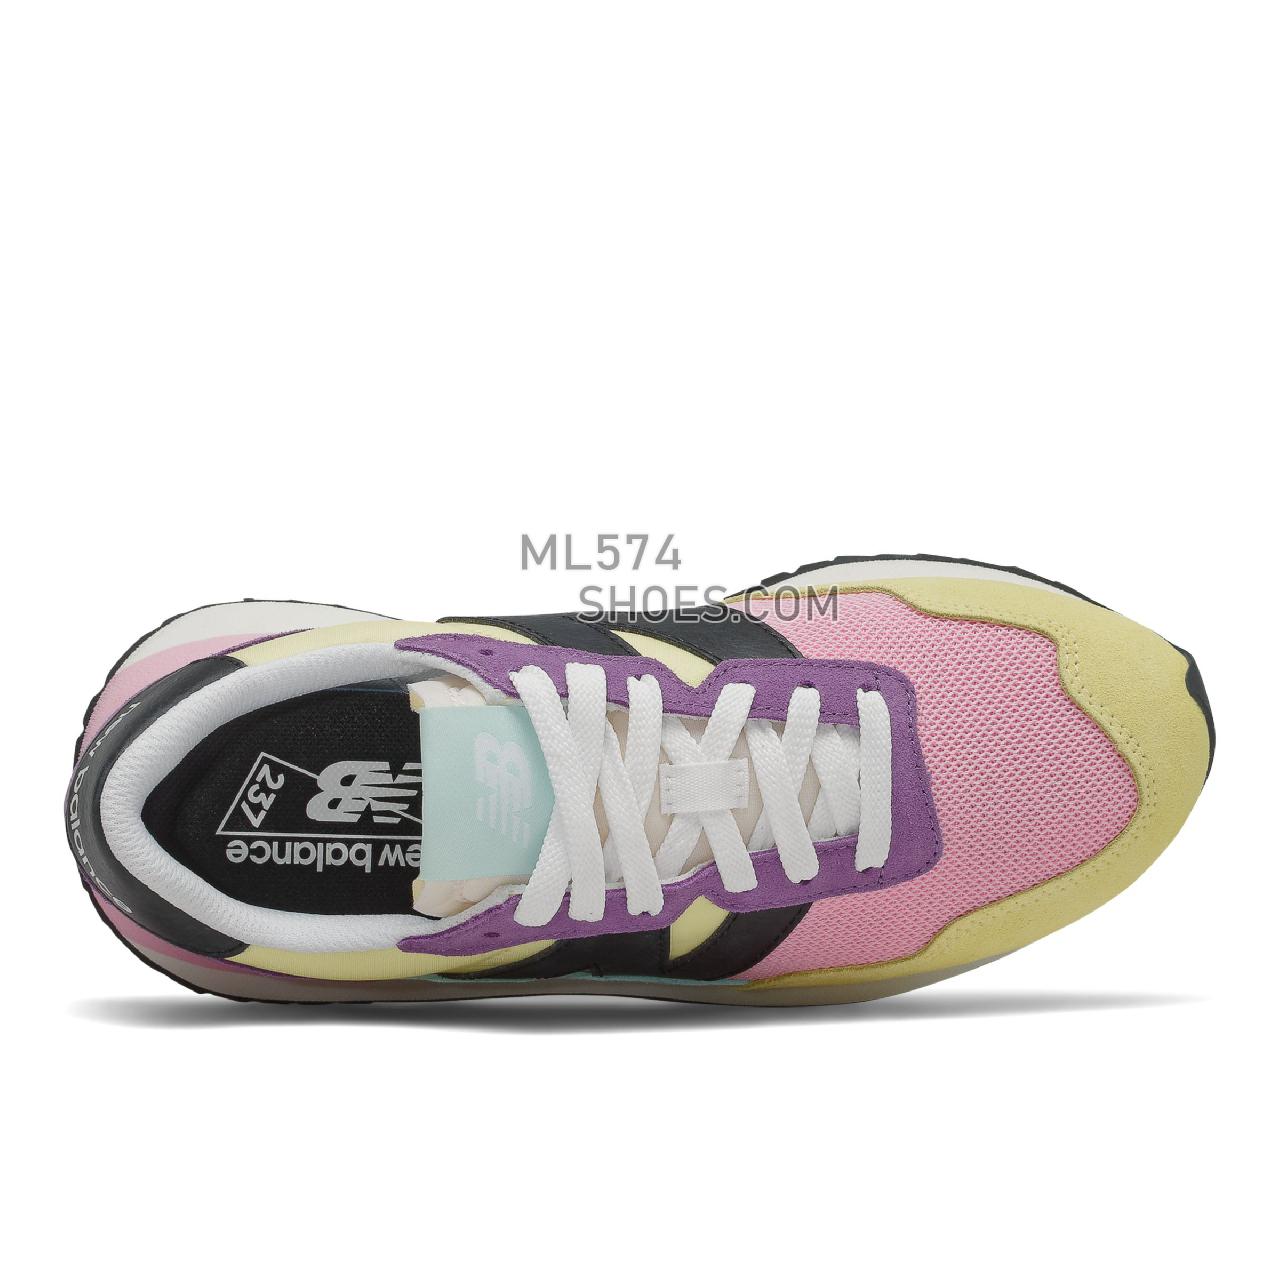 New Balance 237 - Women's Sport Style Sneakers - Lemon Haze with Sour Grape - WS237PW1